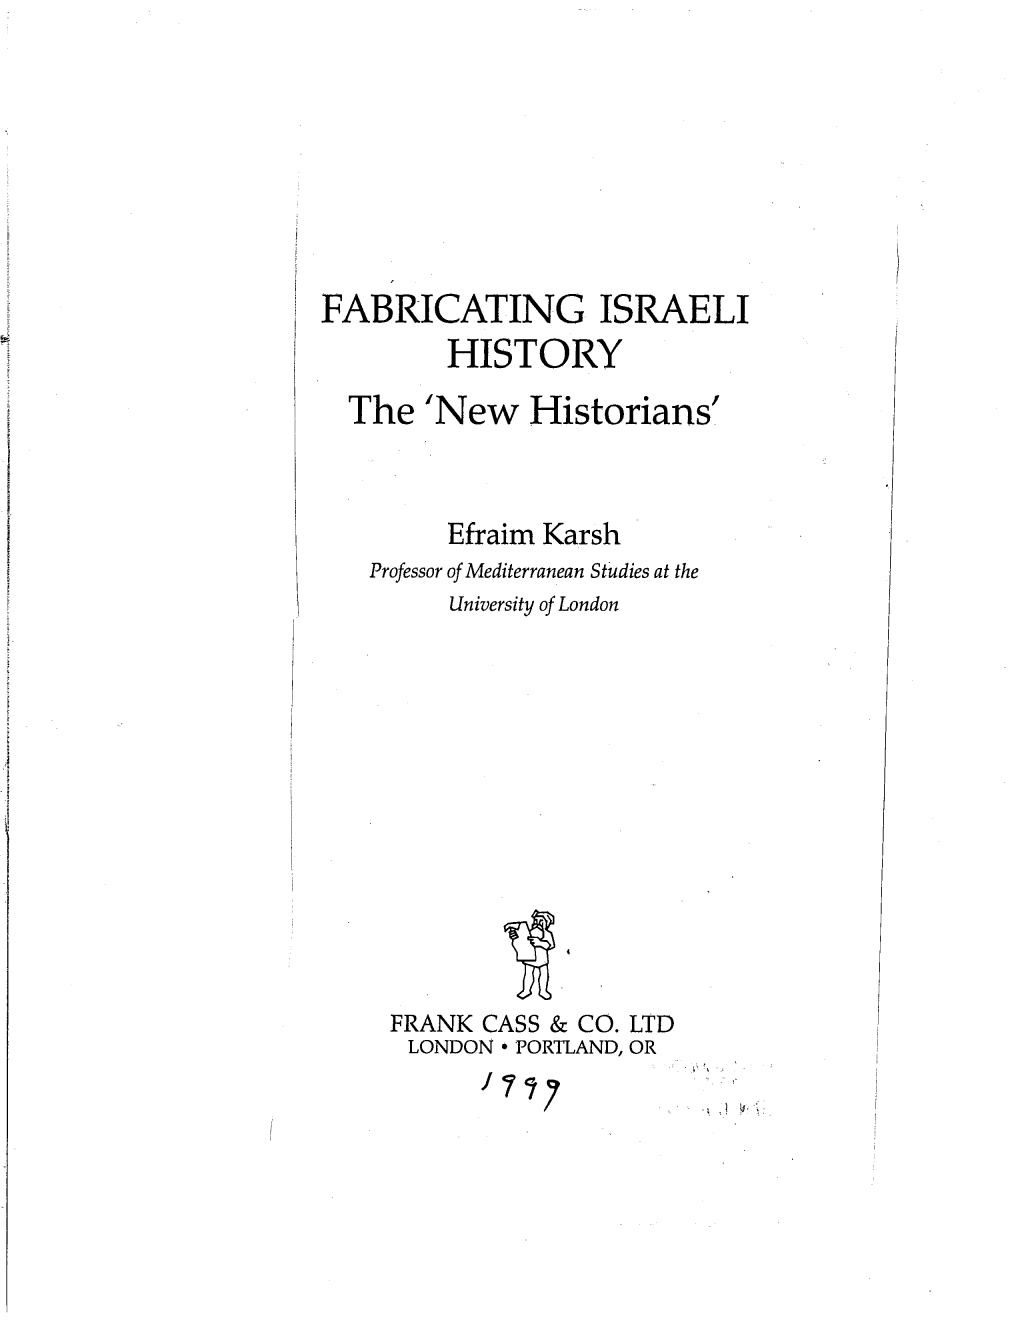 FABRICATING ISRAELI HISTORY the 'New Historians'